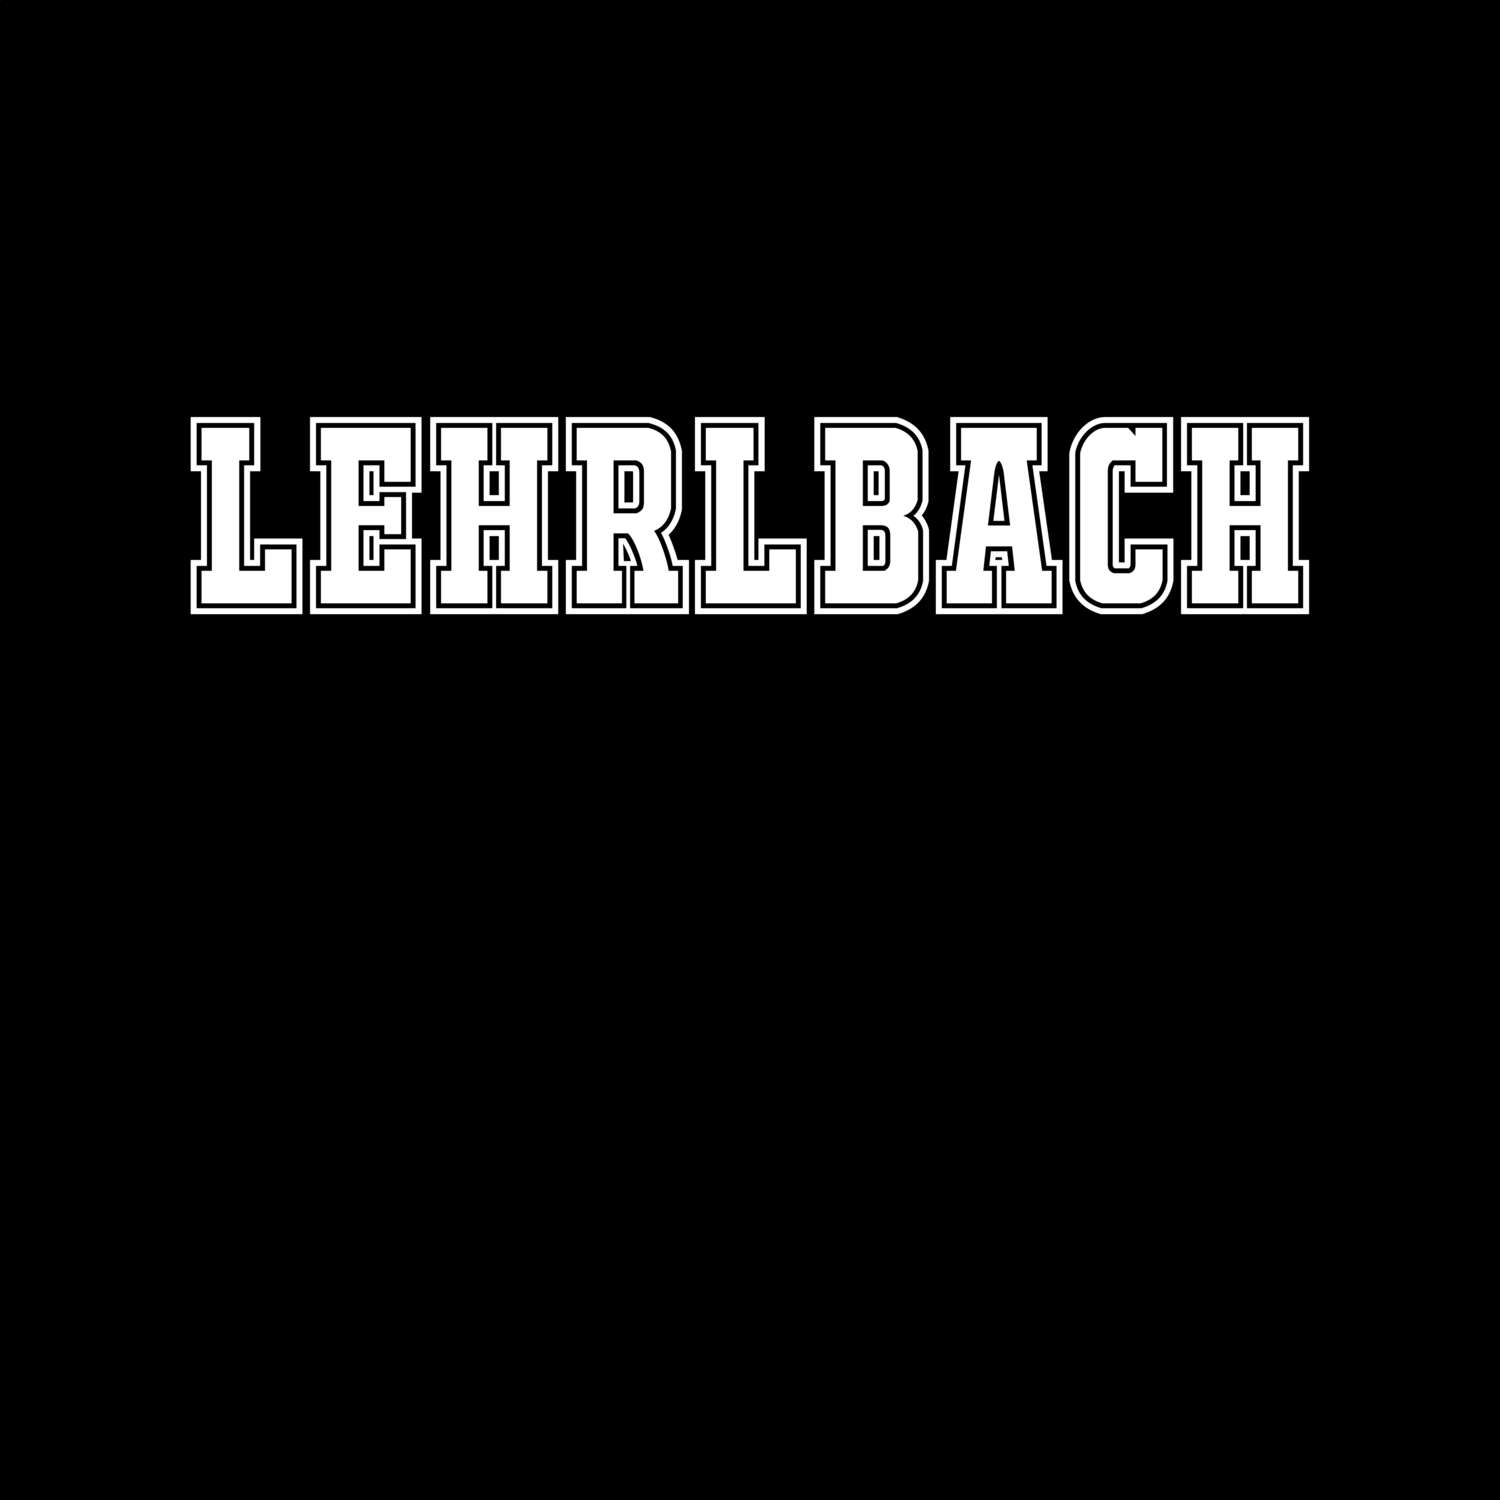 Lehrlbach T-Shirt »Classic«